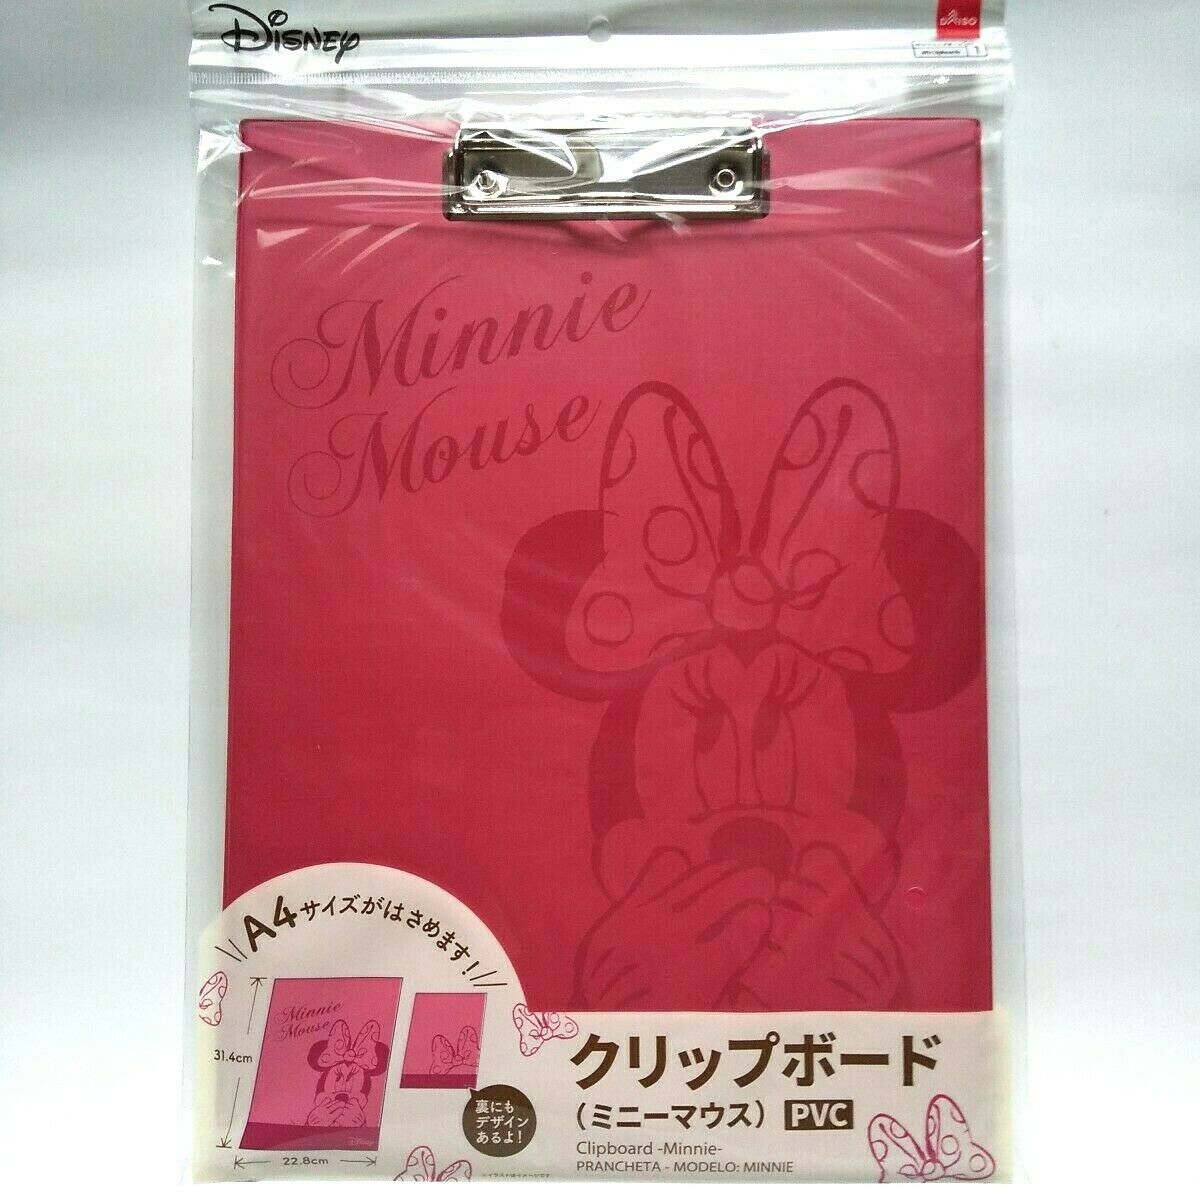 Kawaii Disney Minnie Mouse Clipboard A4 Pvc Pink From Japan